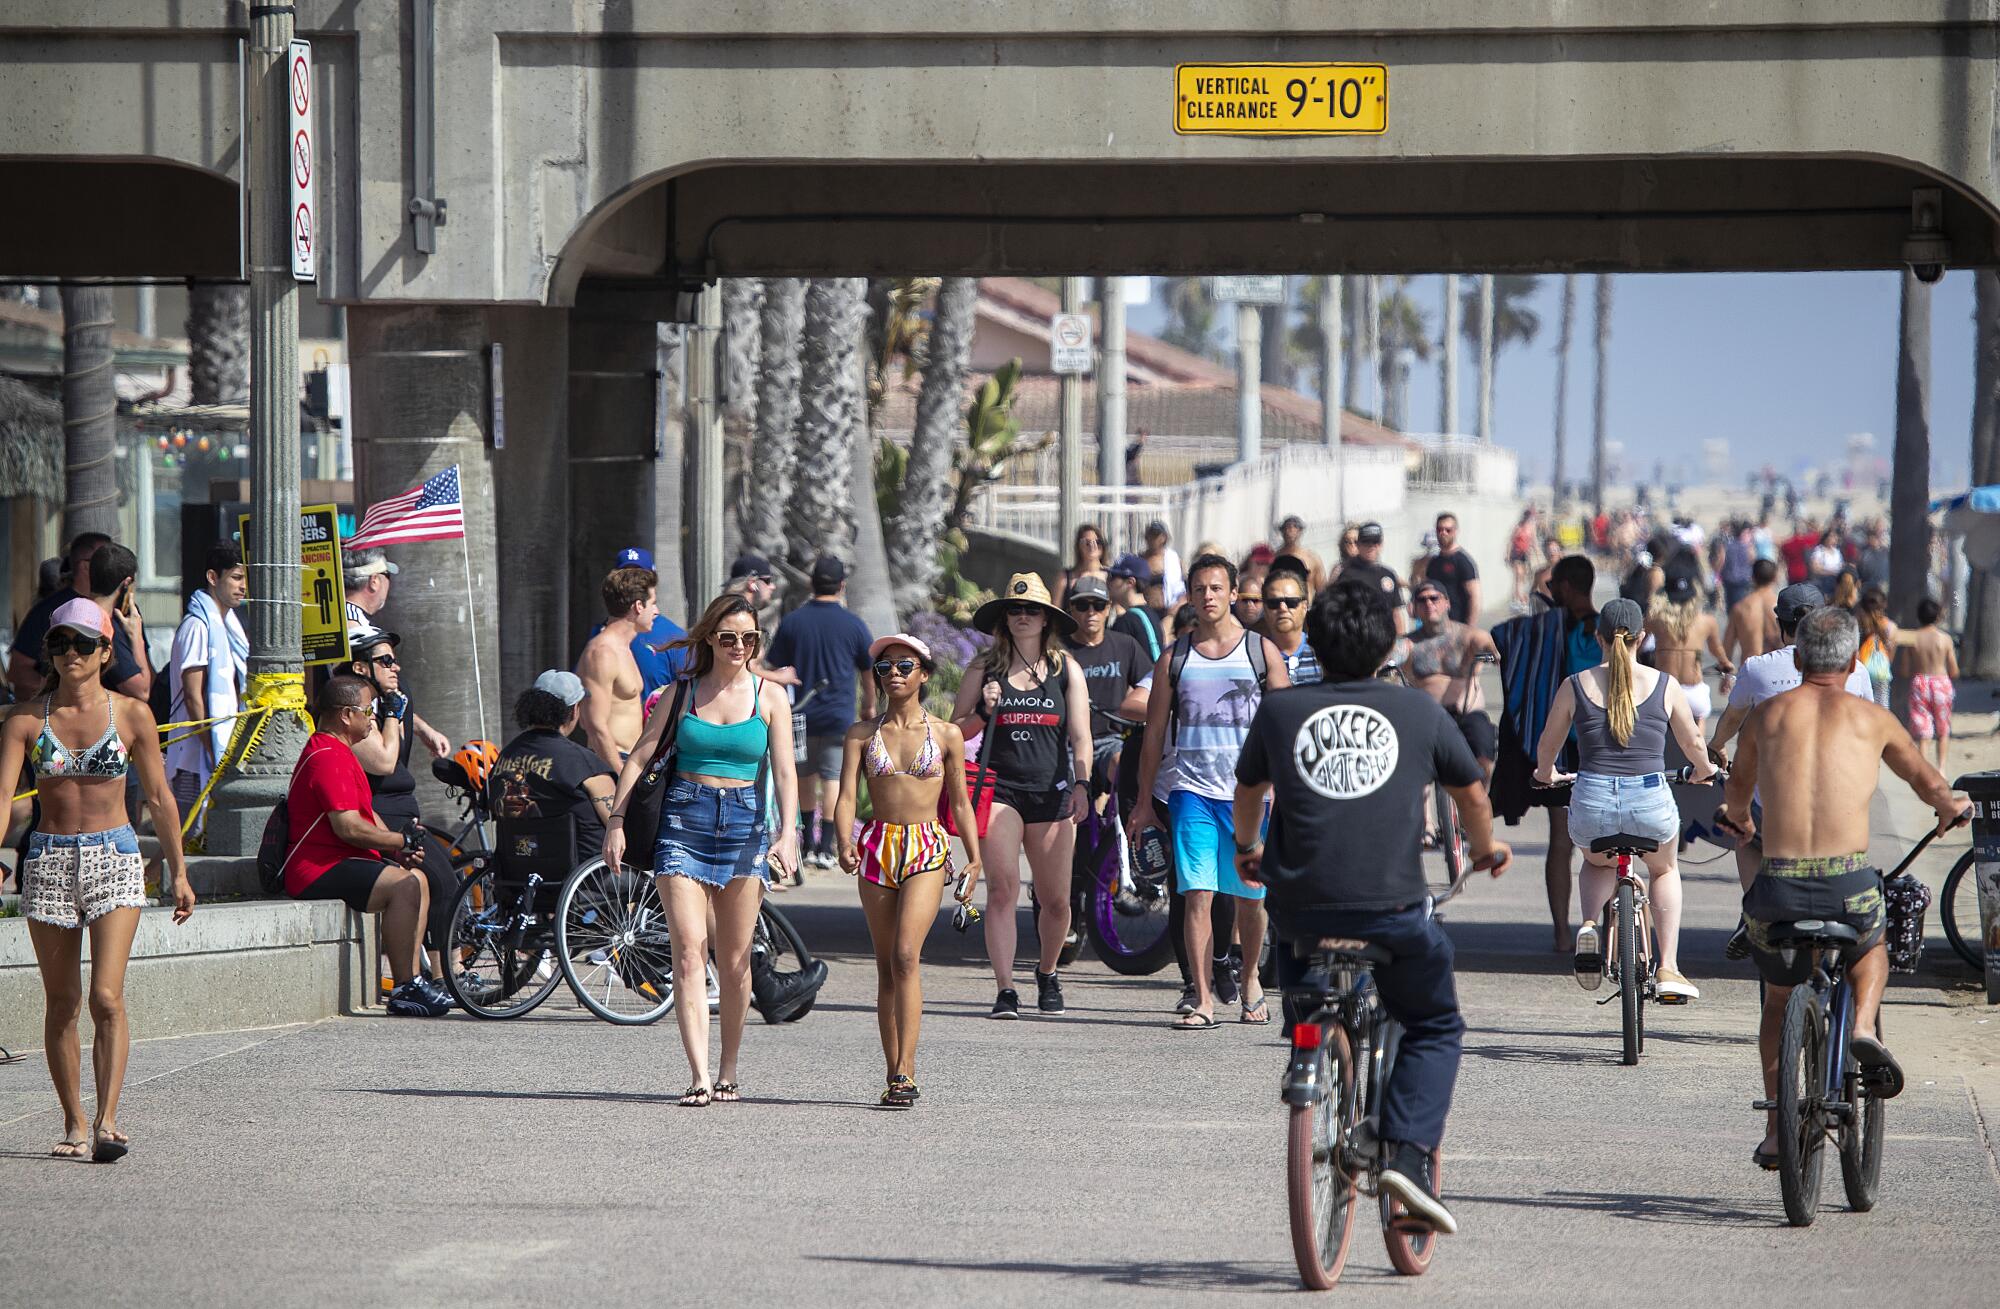 People crowded the bike path around Huntington Beach Pier on Saturday.